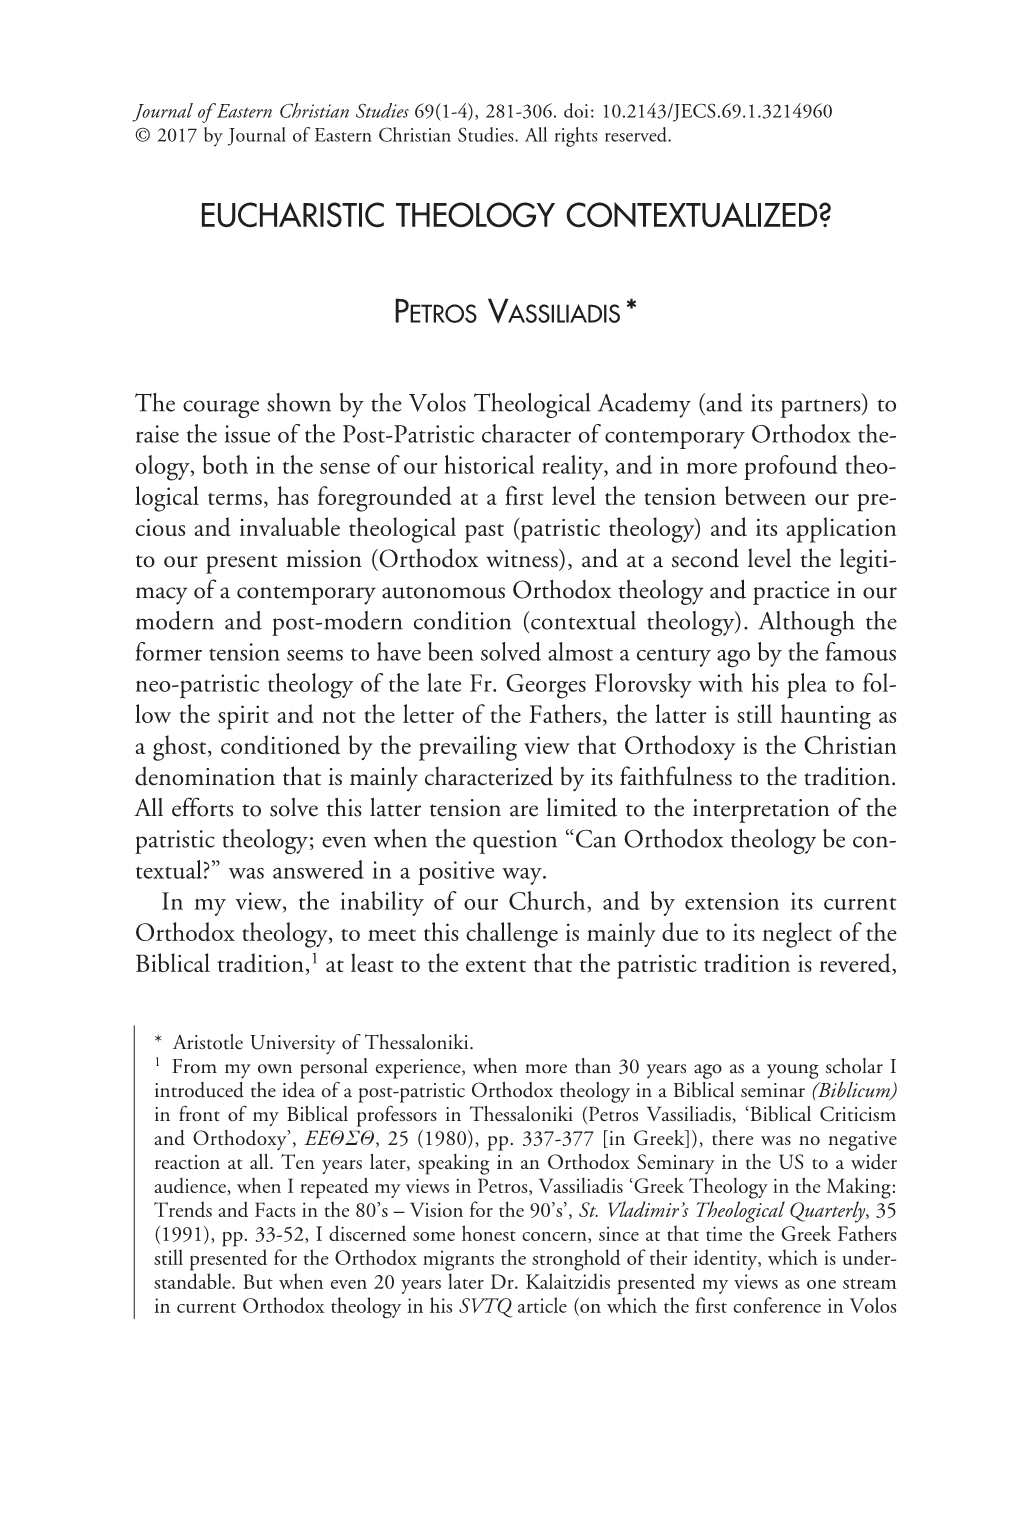 Eucharistic Theology Contextualized? Petros Vassiliadis